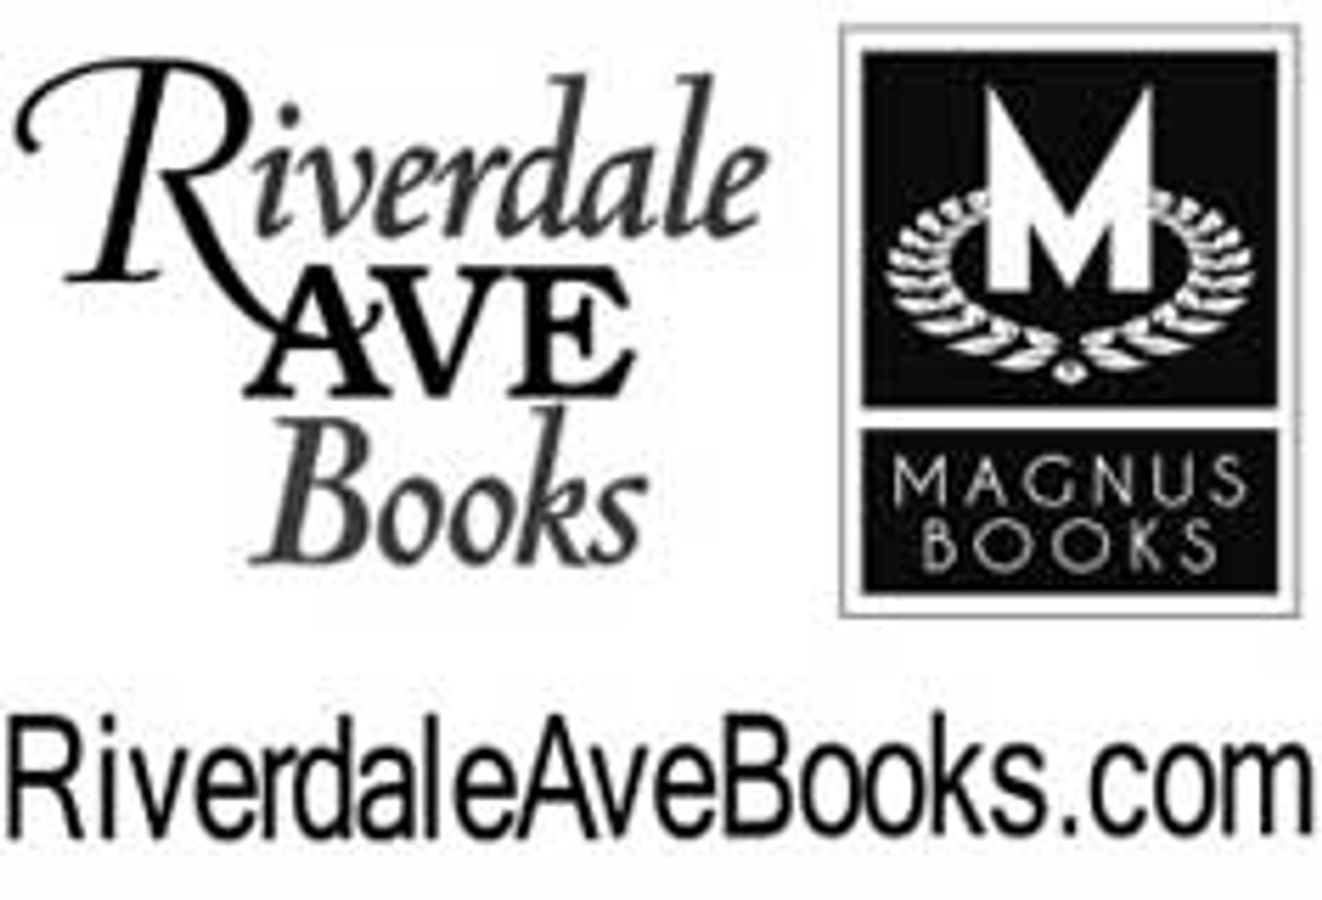 Riverdale Ave Books